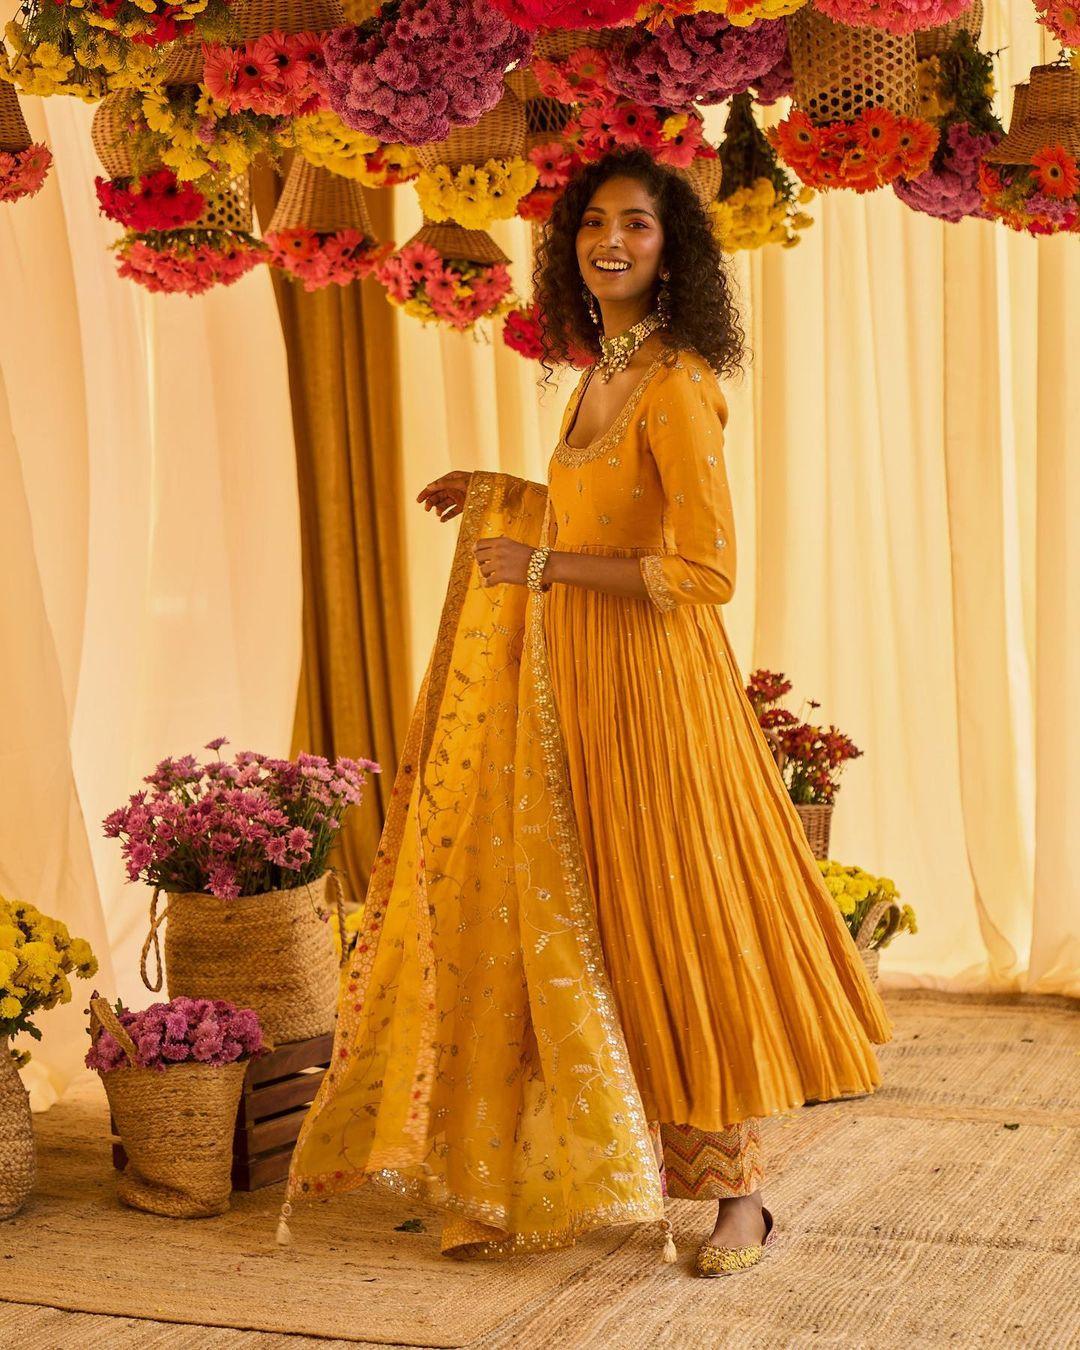 Rakul Preet Singh Bridal Looks from haldi, mehendi and more | Times Now